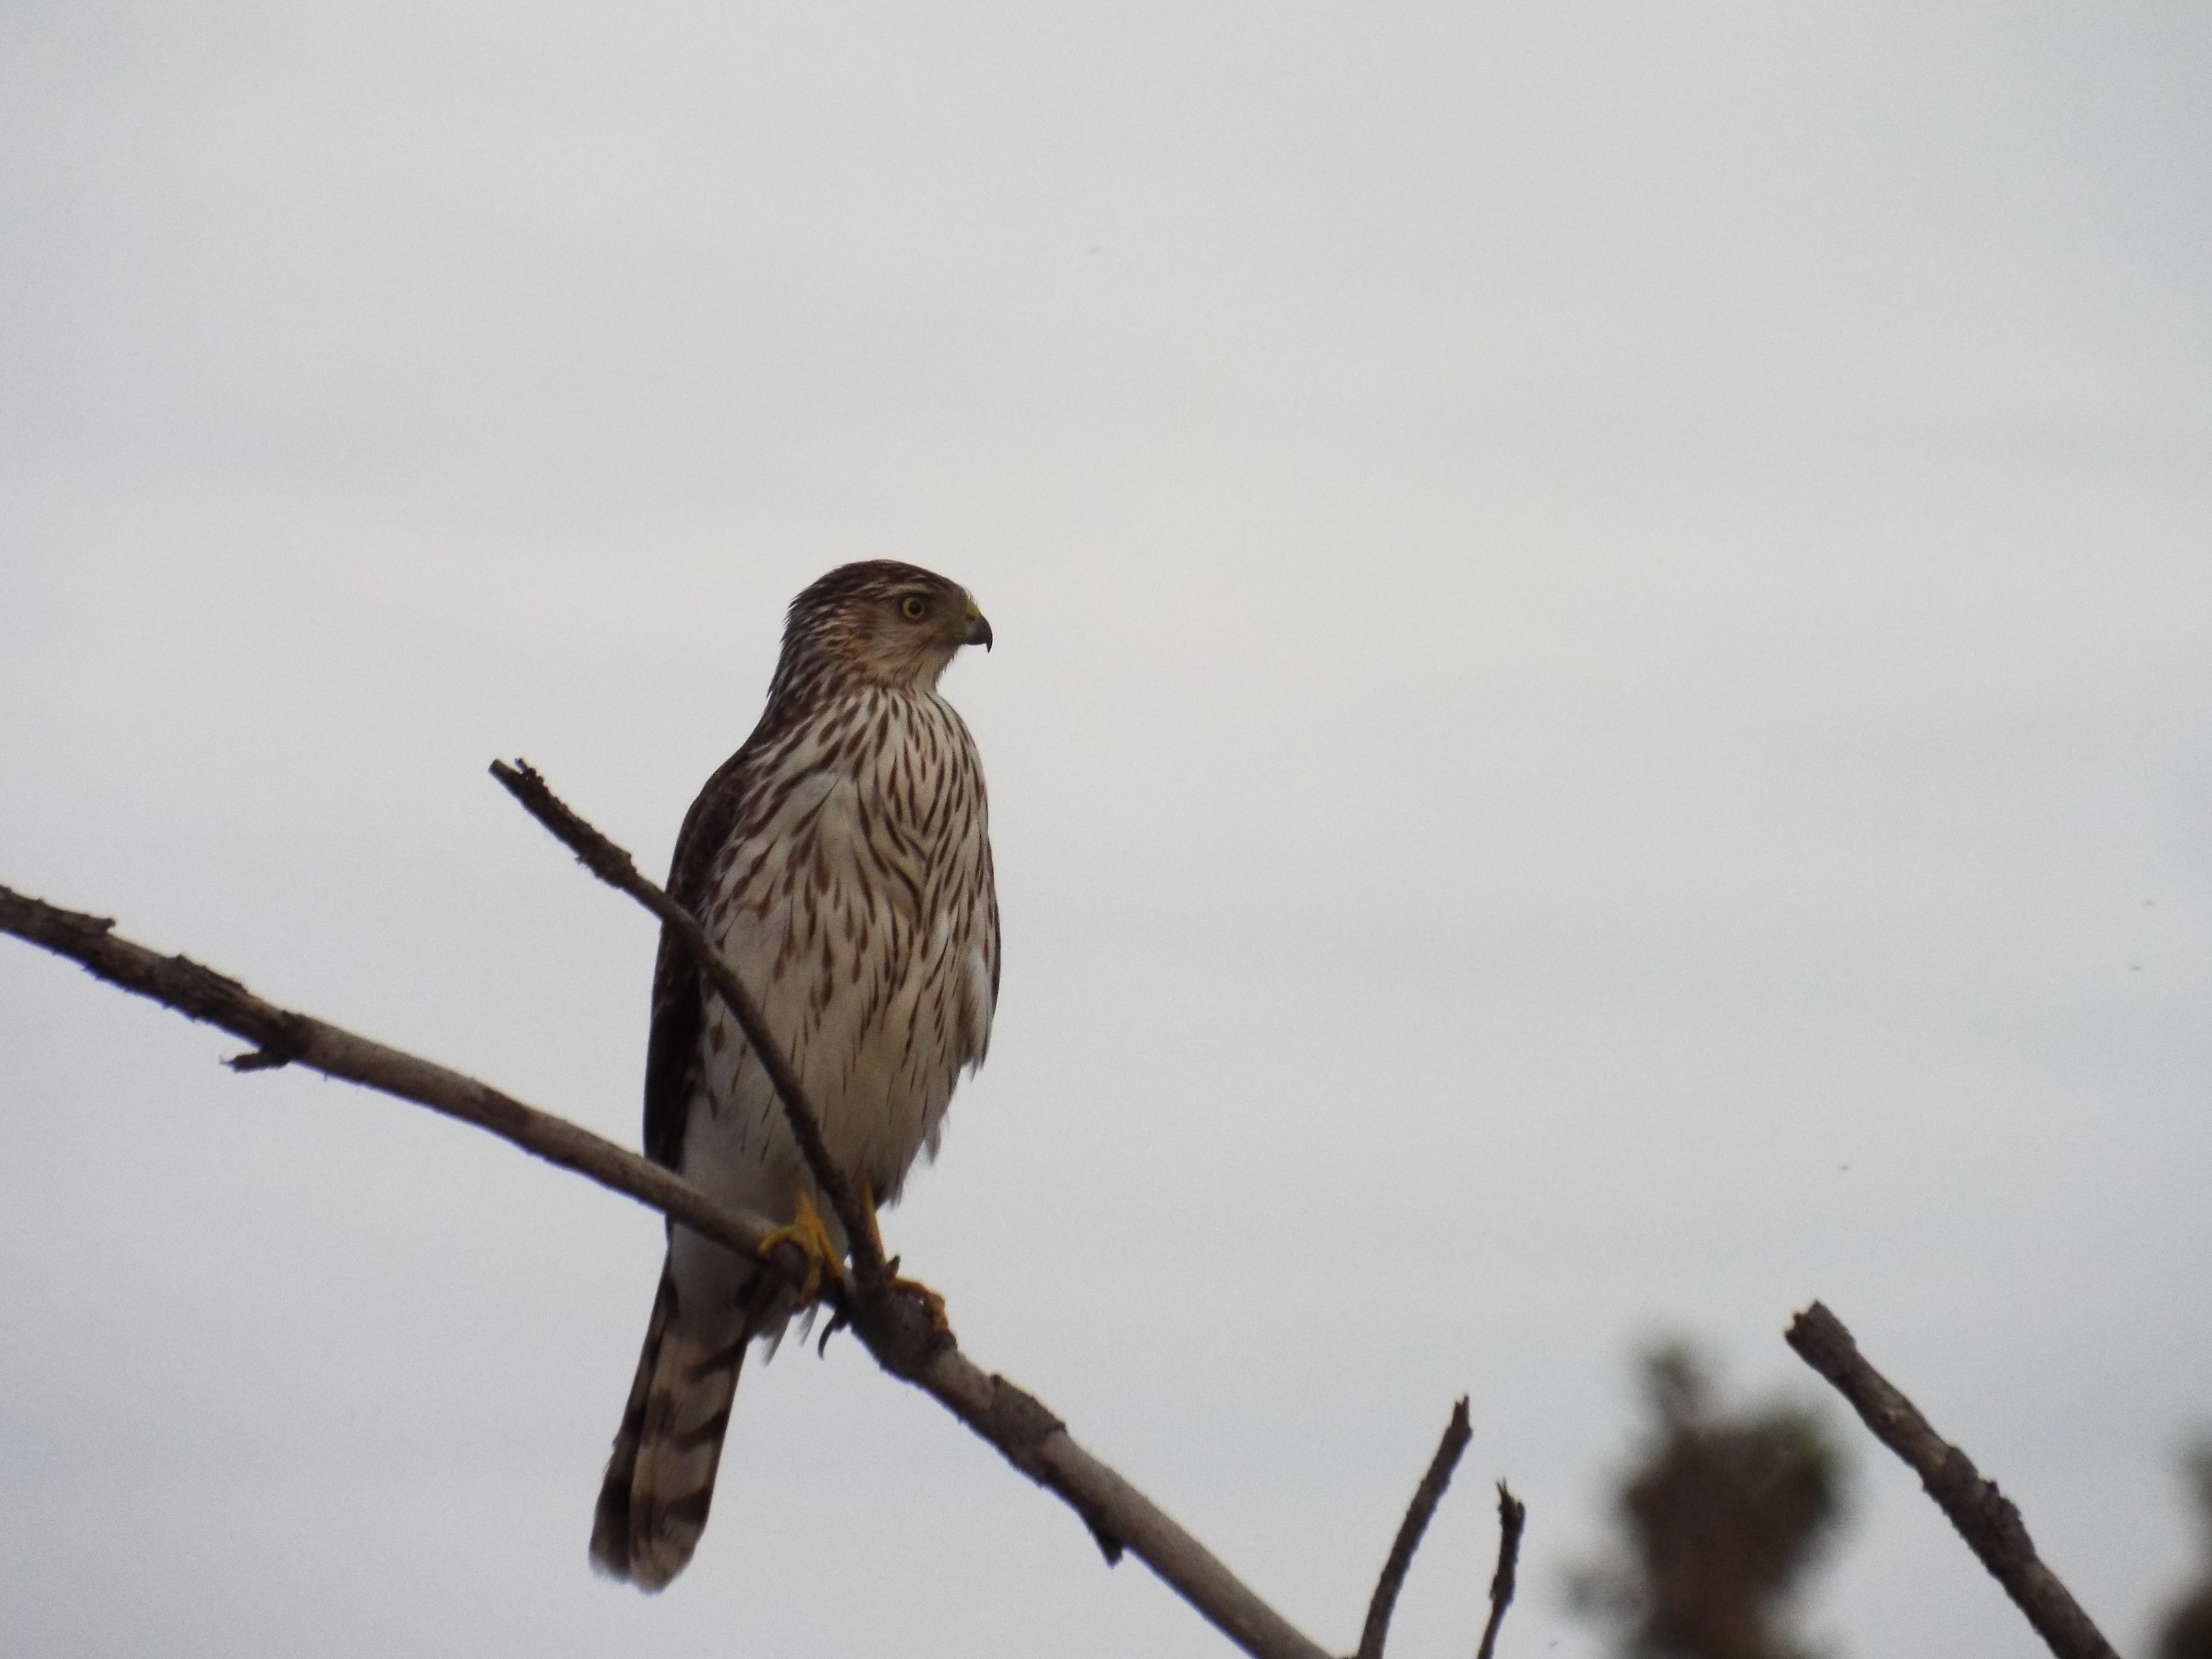 Juvenile sharp-shinned hawk